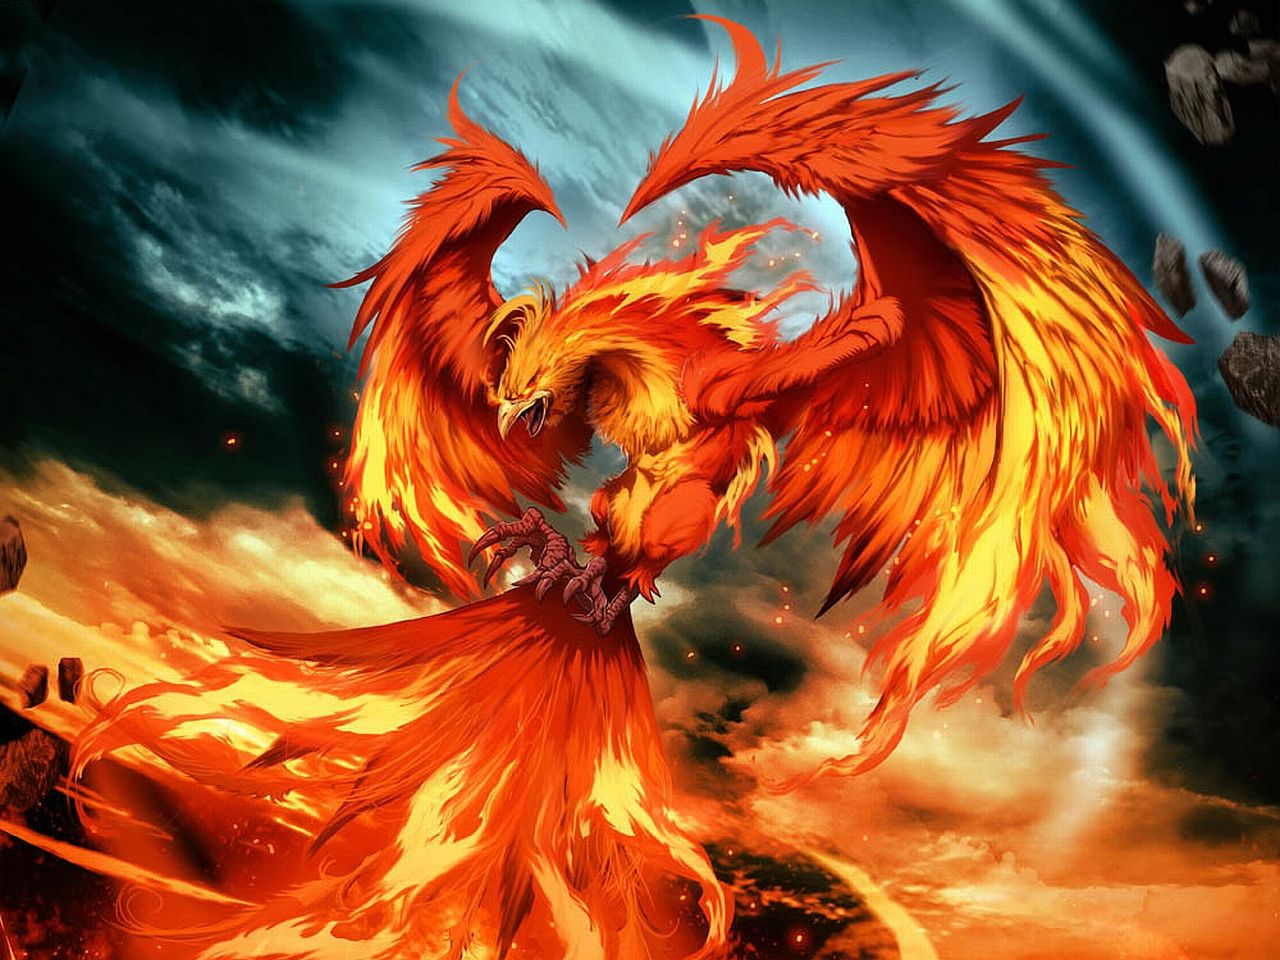 phoenix reborn by Pavel Kaplun